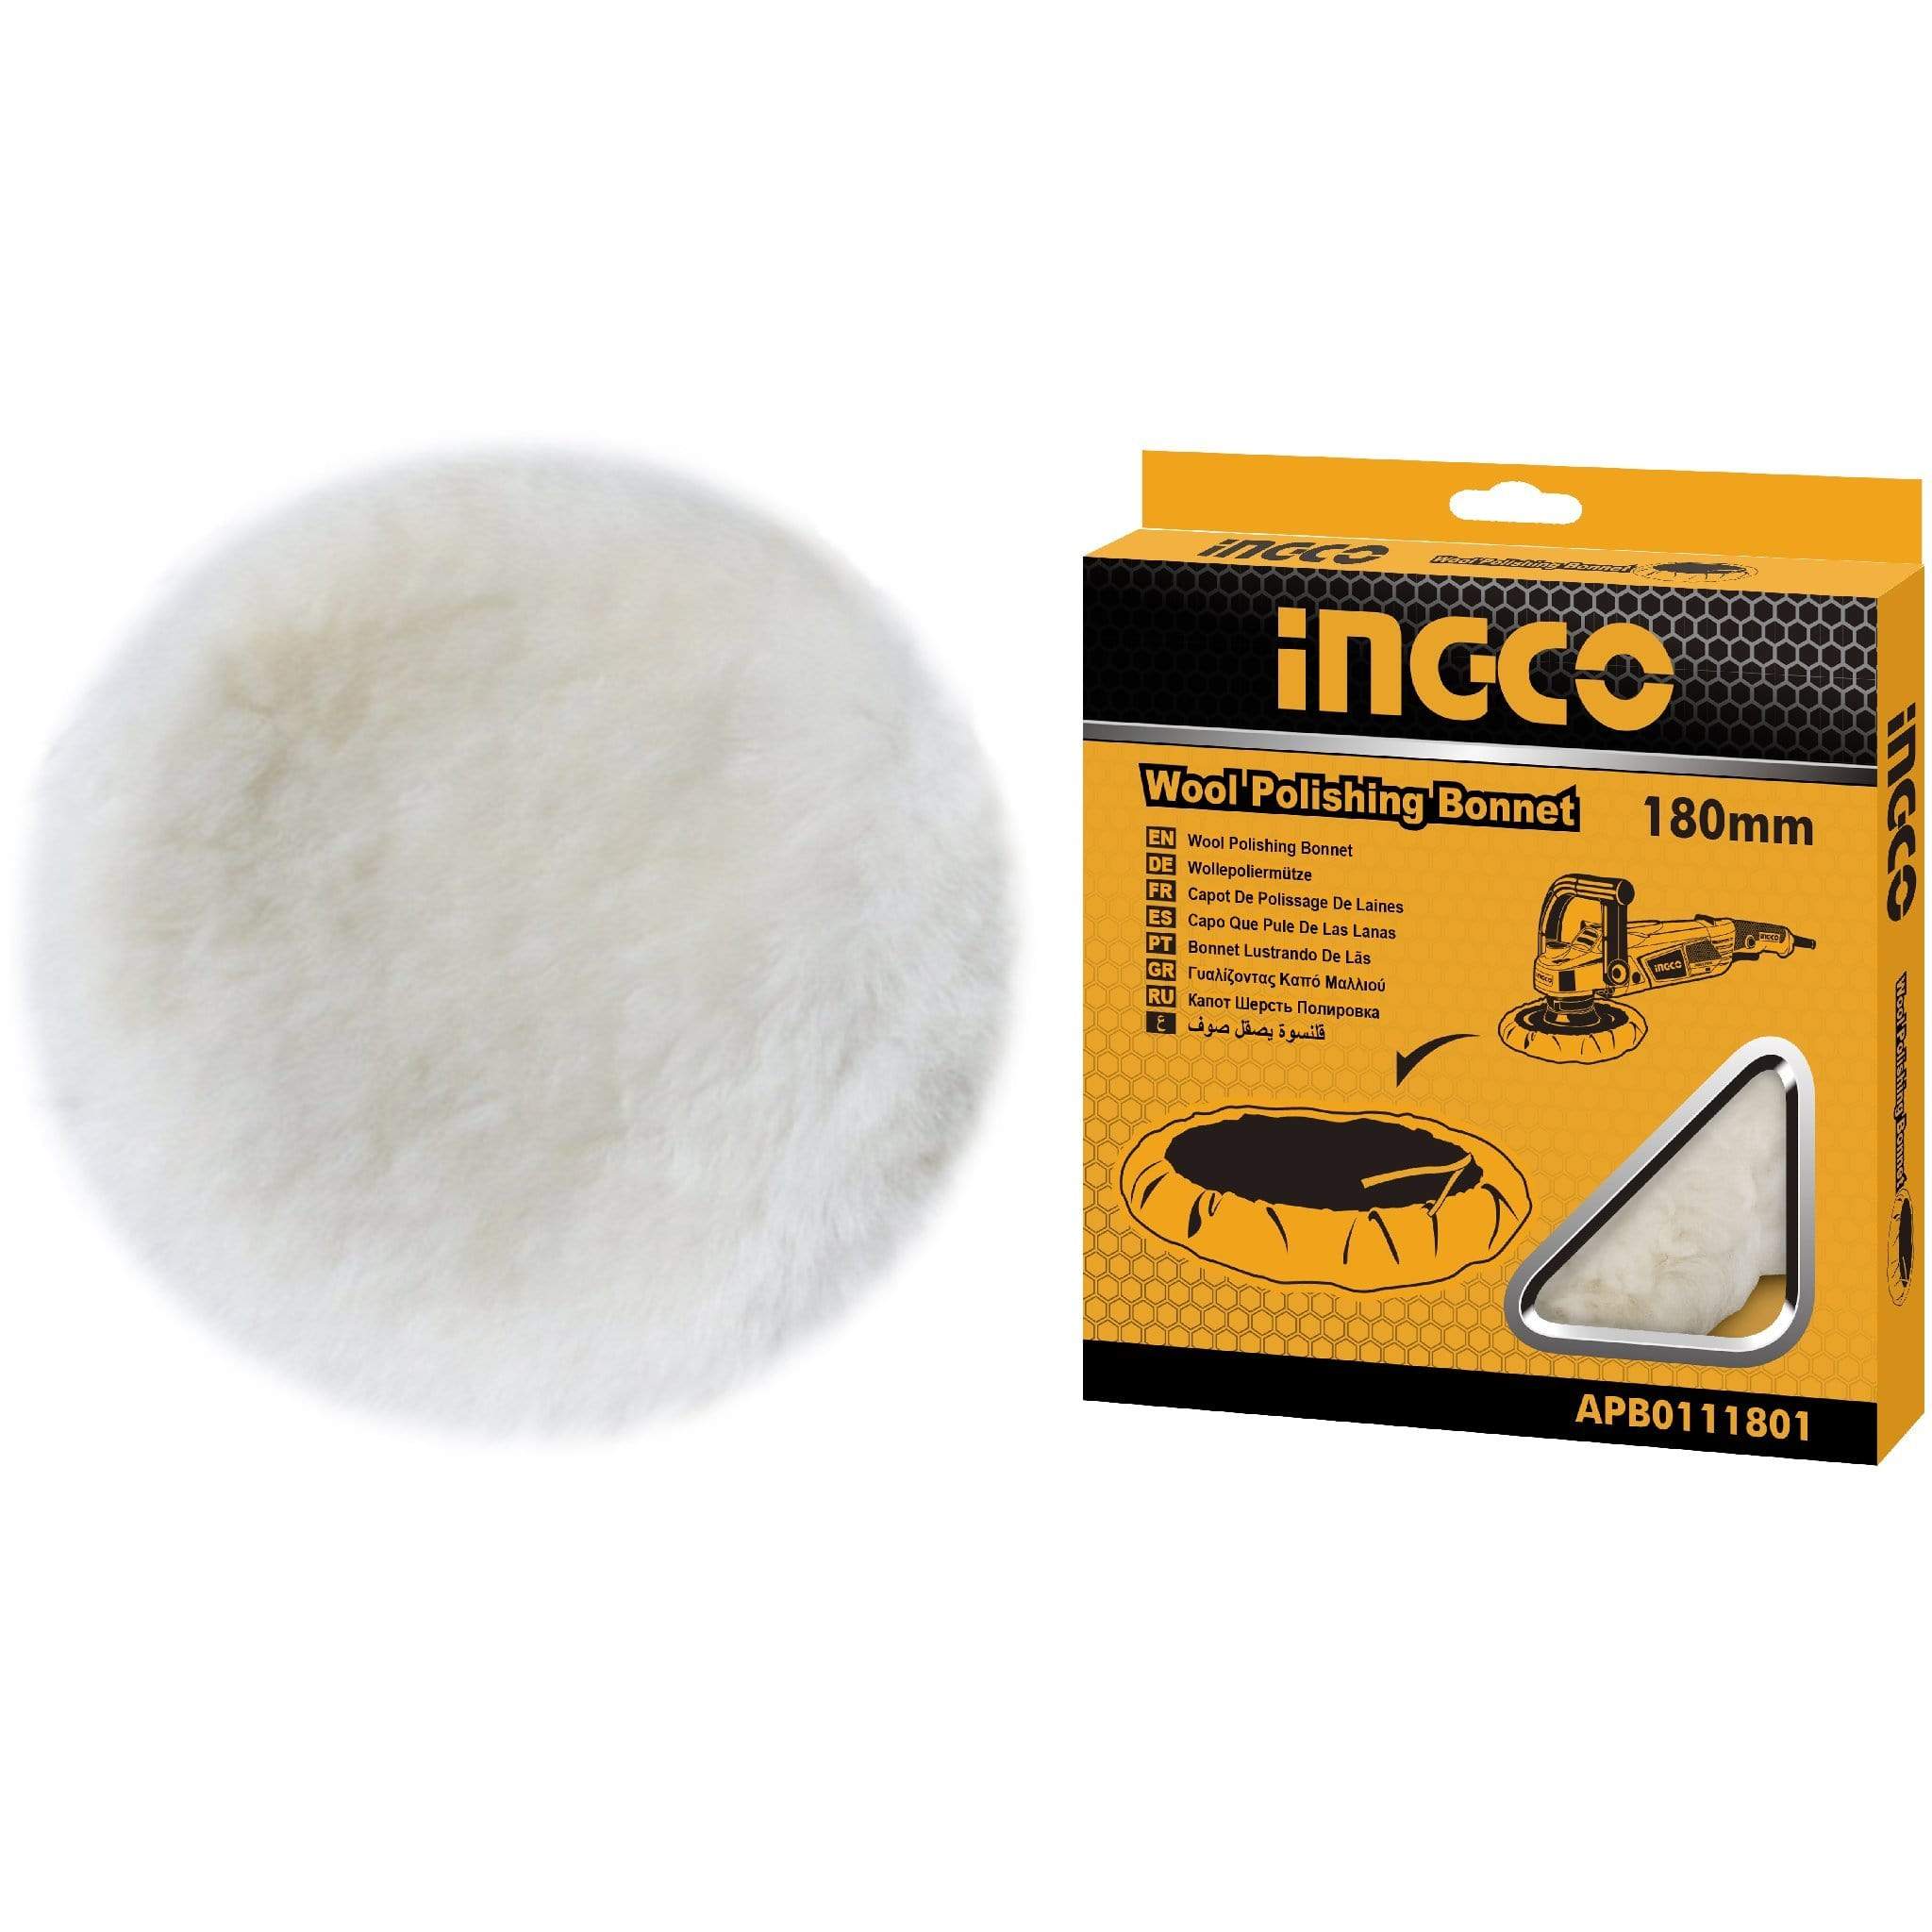 Ingco Wool Polishing Bonnet - APB0111801